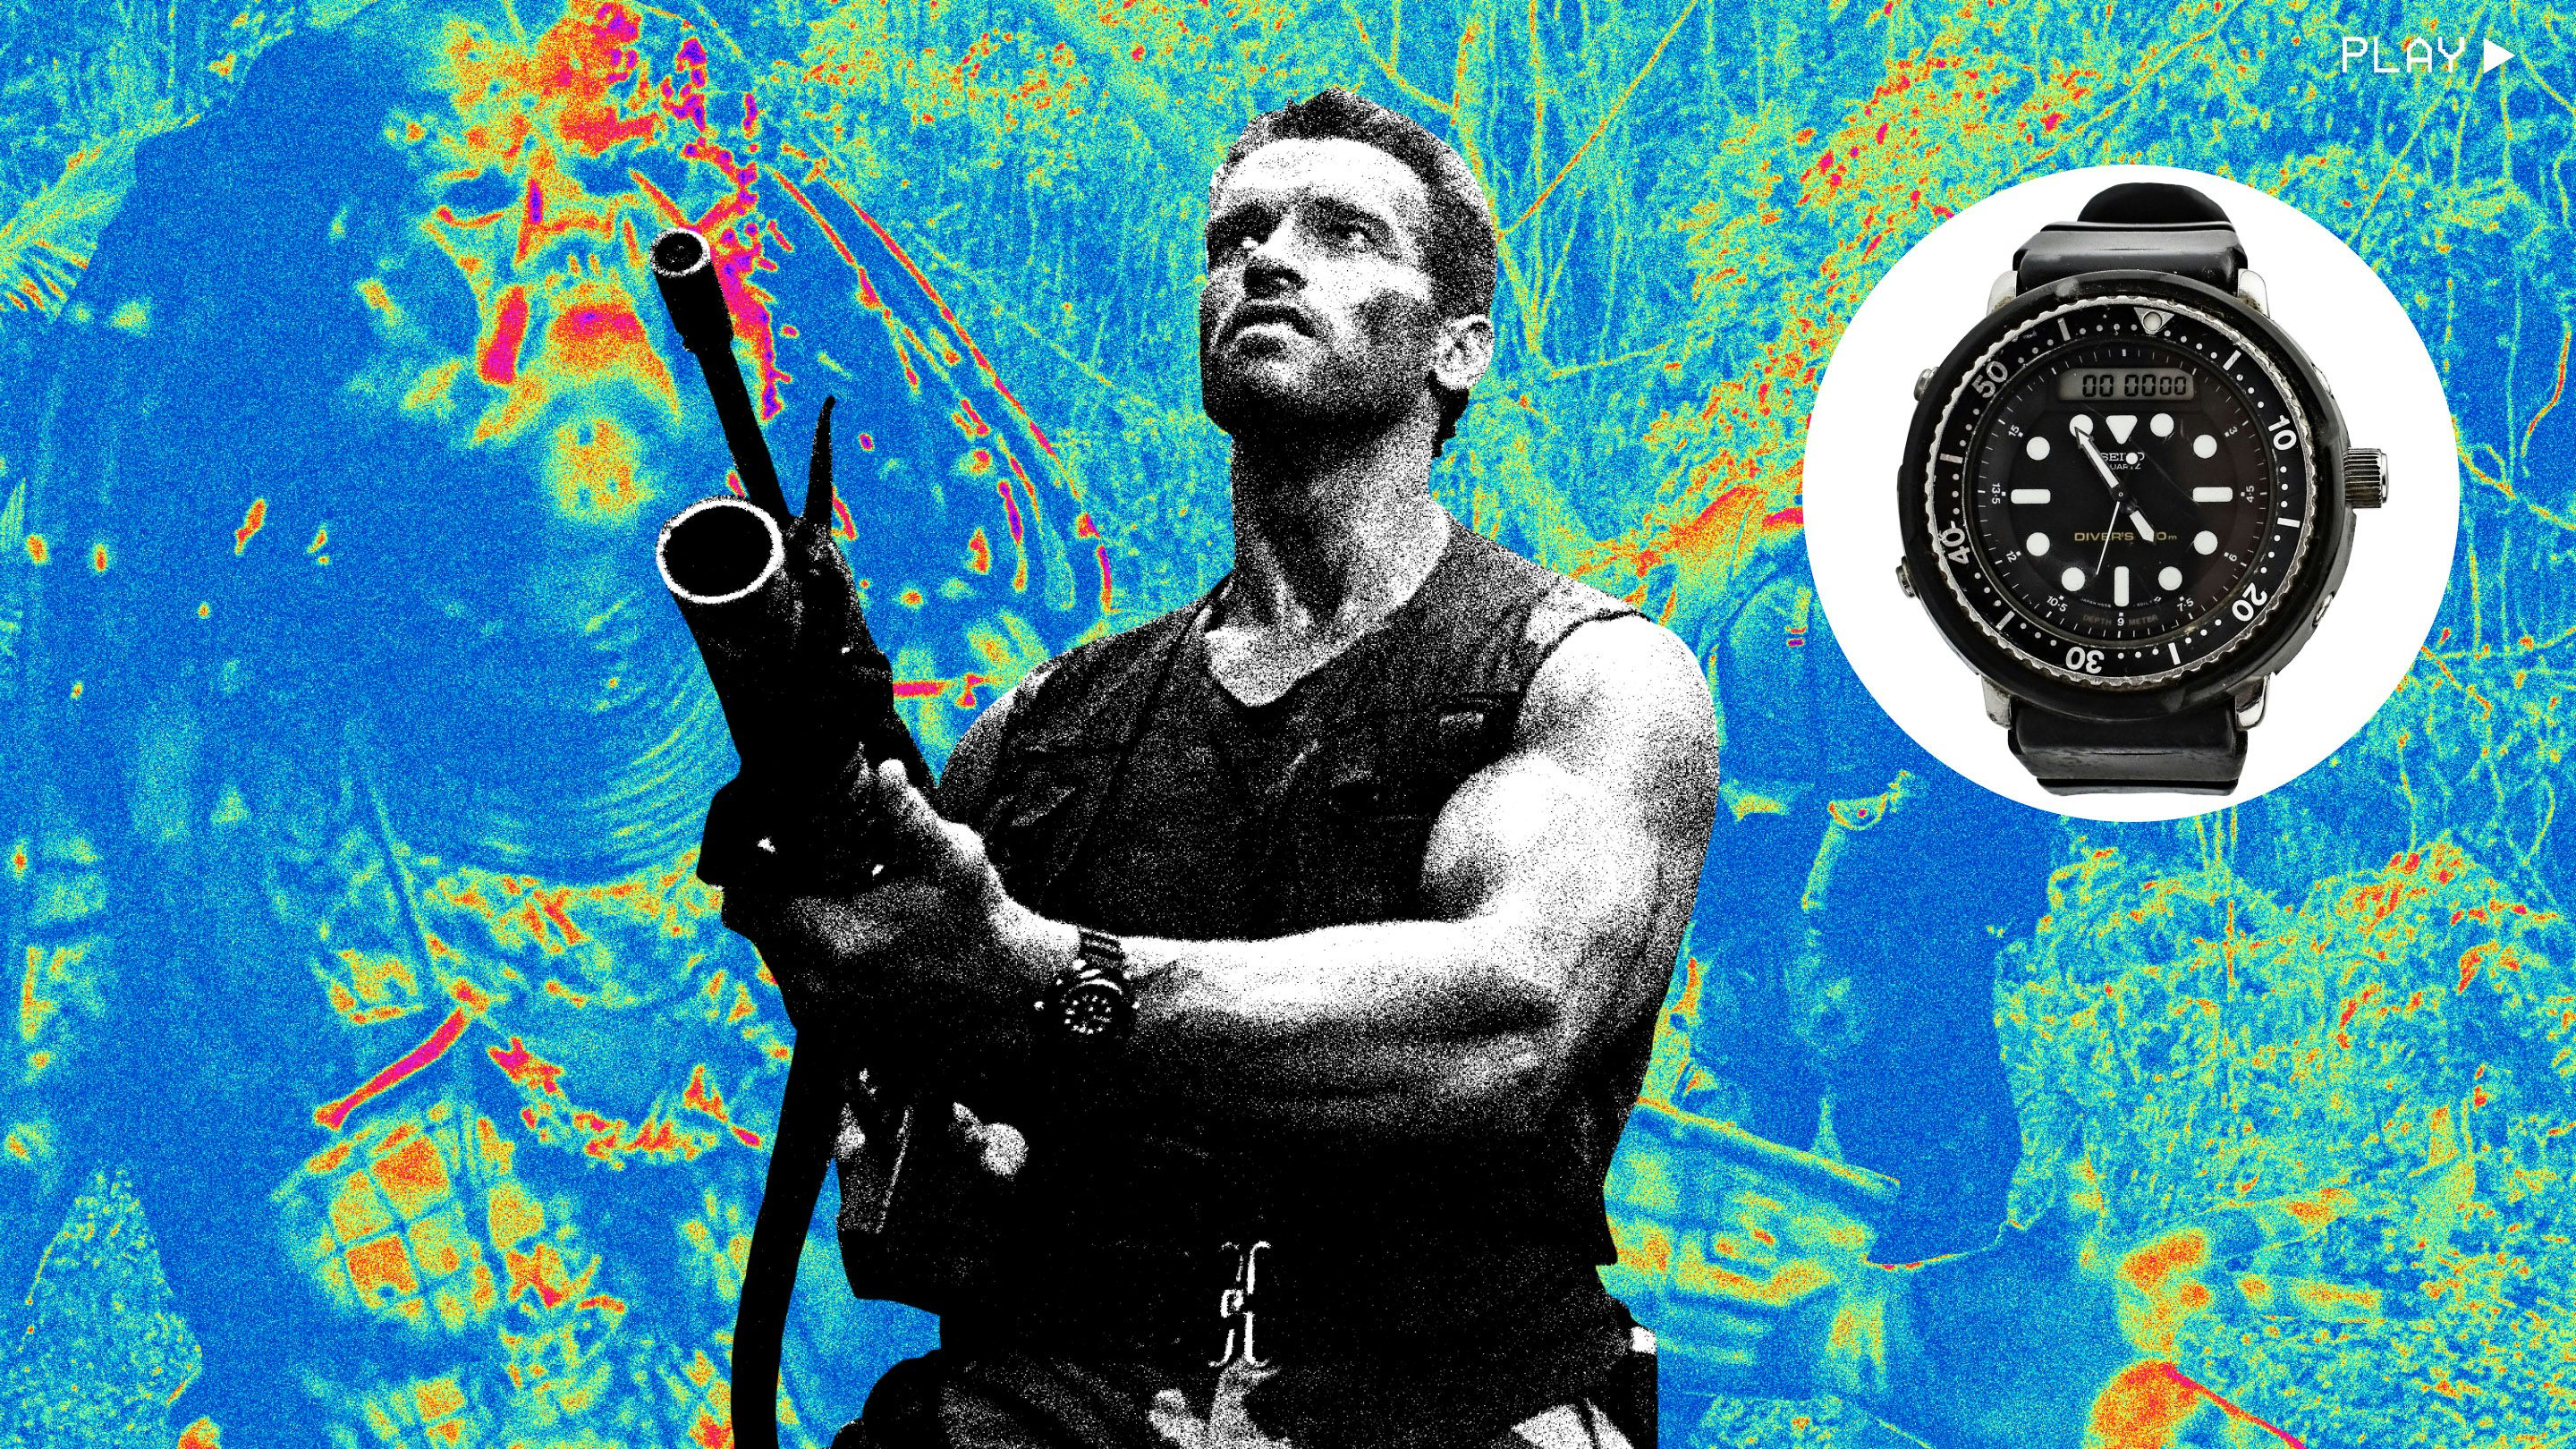 Arnold Schwarzenegger's Seiko Watch In 'Predator'